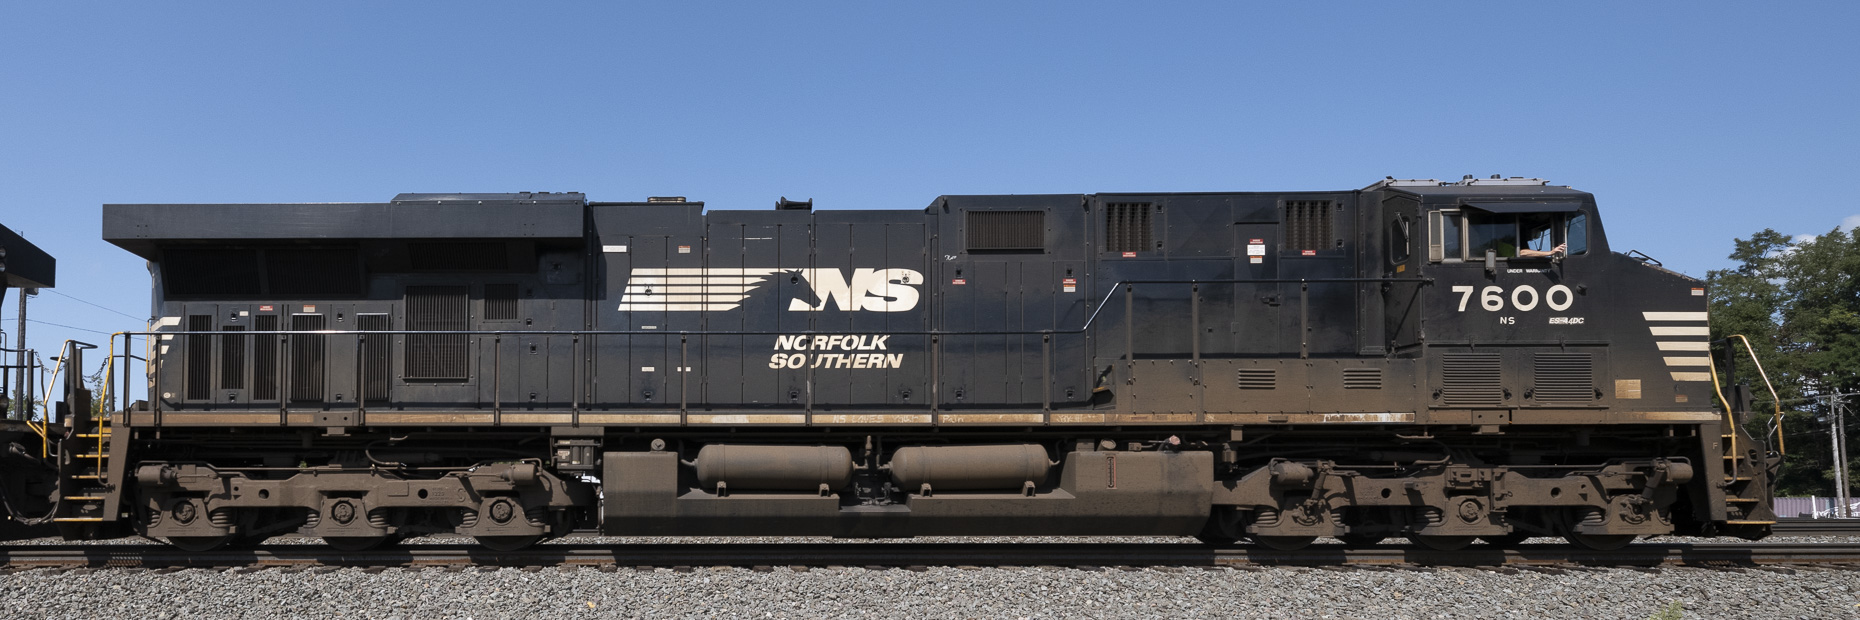 Locomotive NS 7600